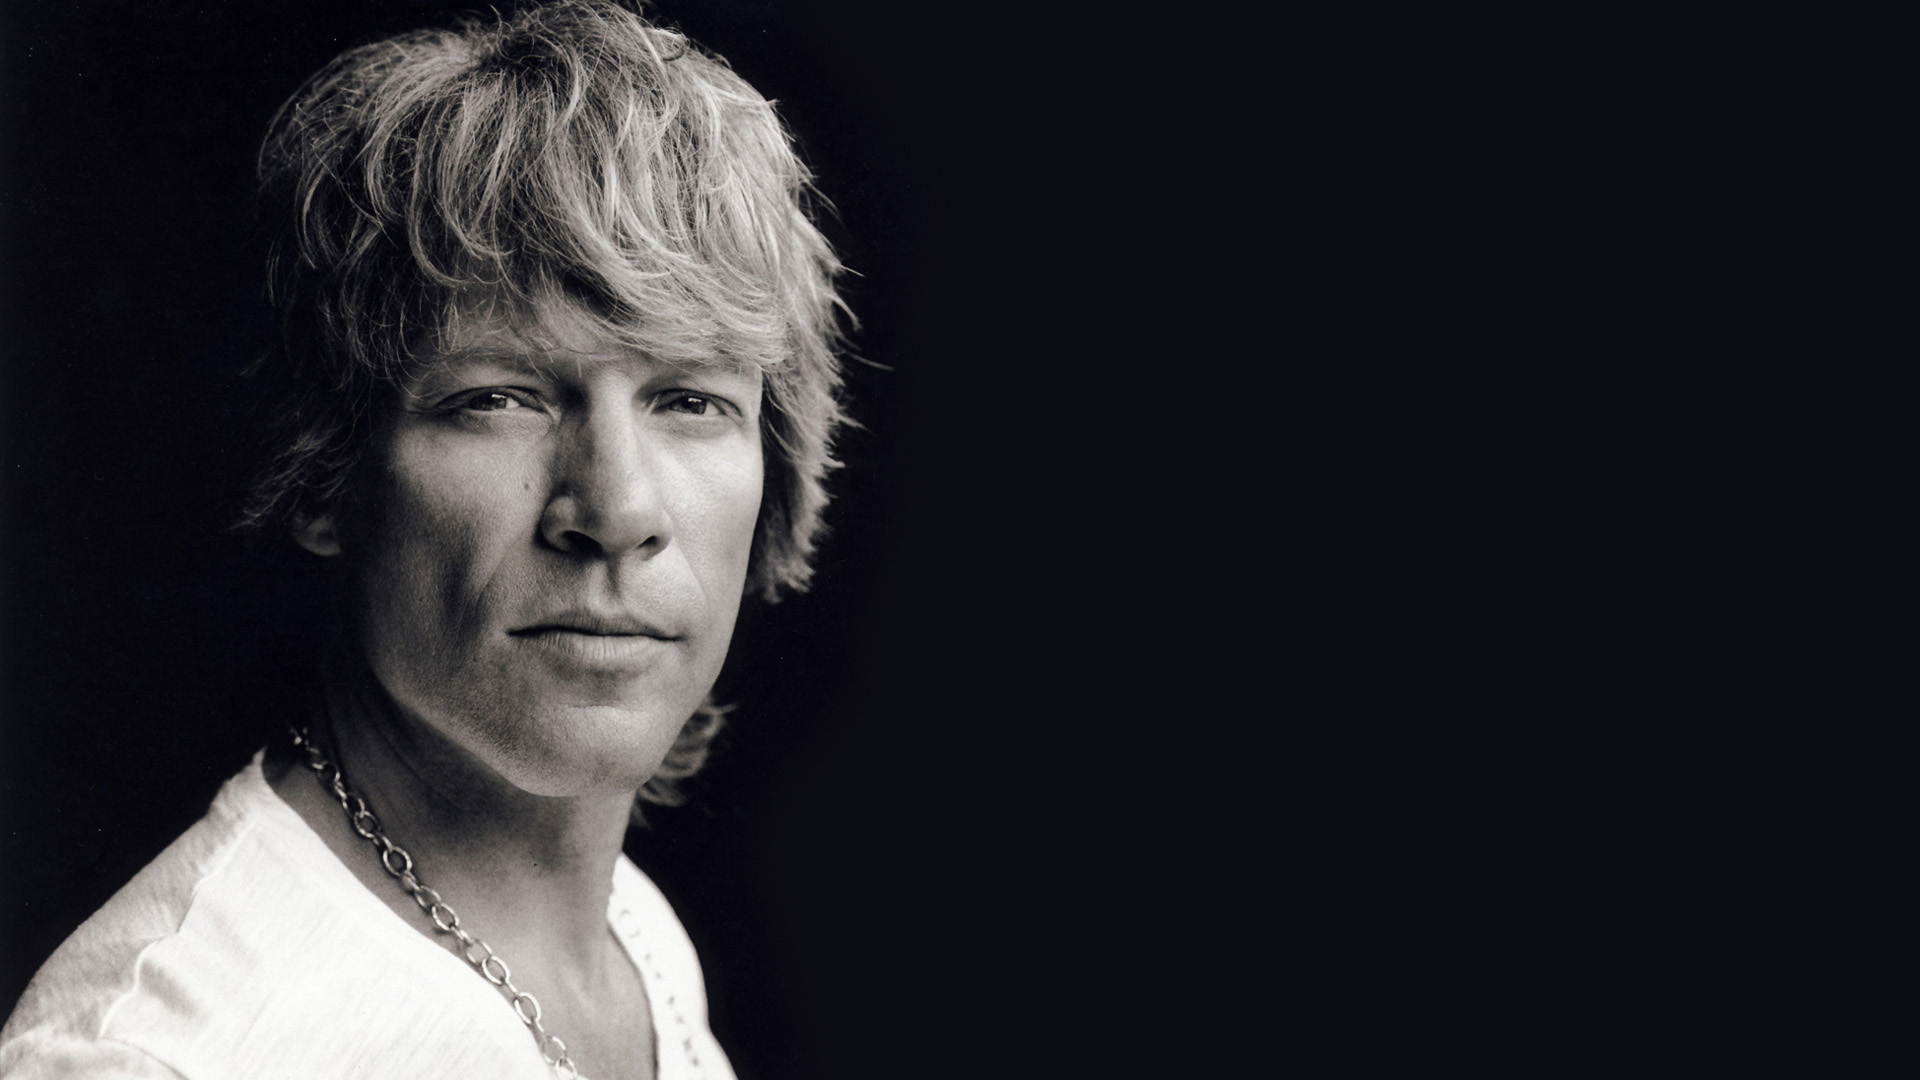 Jon Bon Jovi Wallpaper   Wallpaper High Definition High 1920x1080